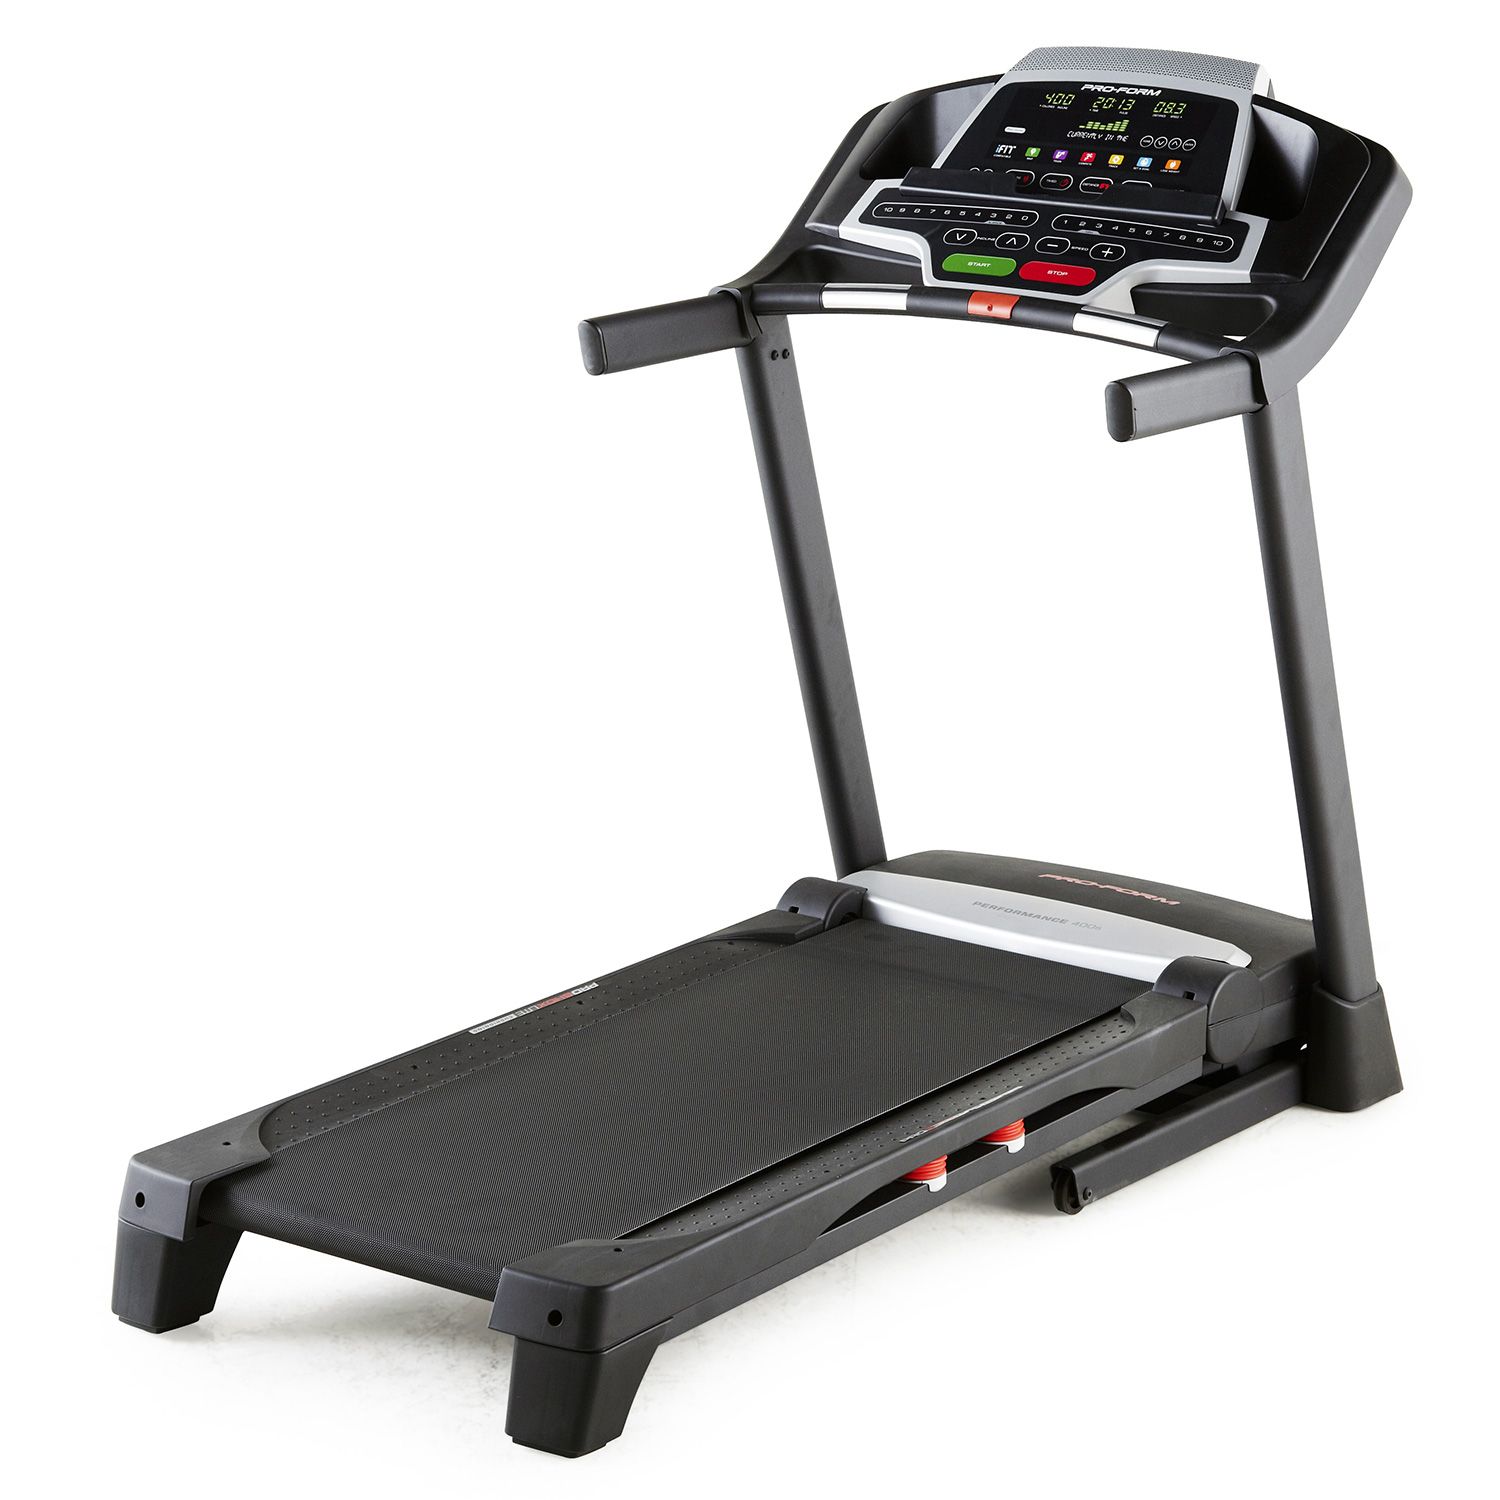 Download 585 Proform Performance Treadmill Manual free - riderrutracker